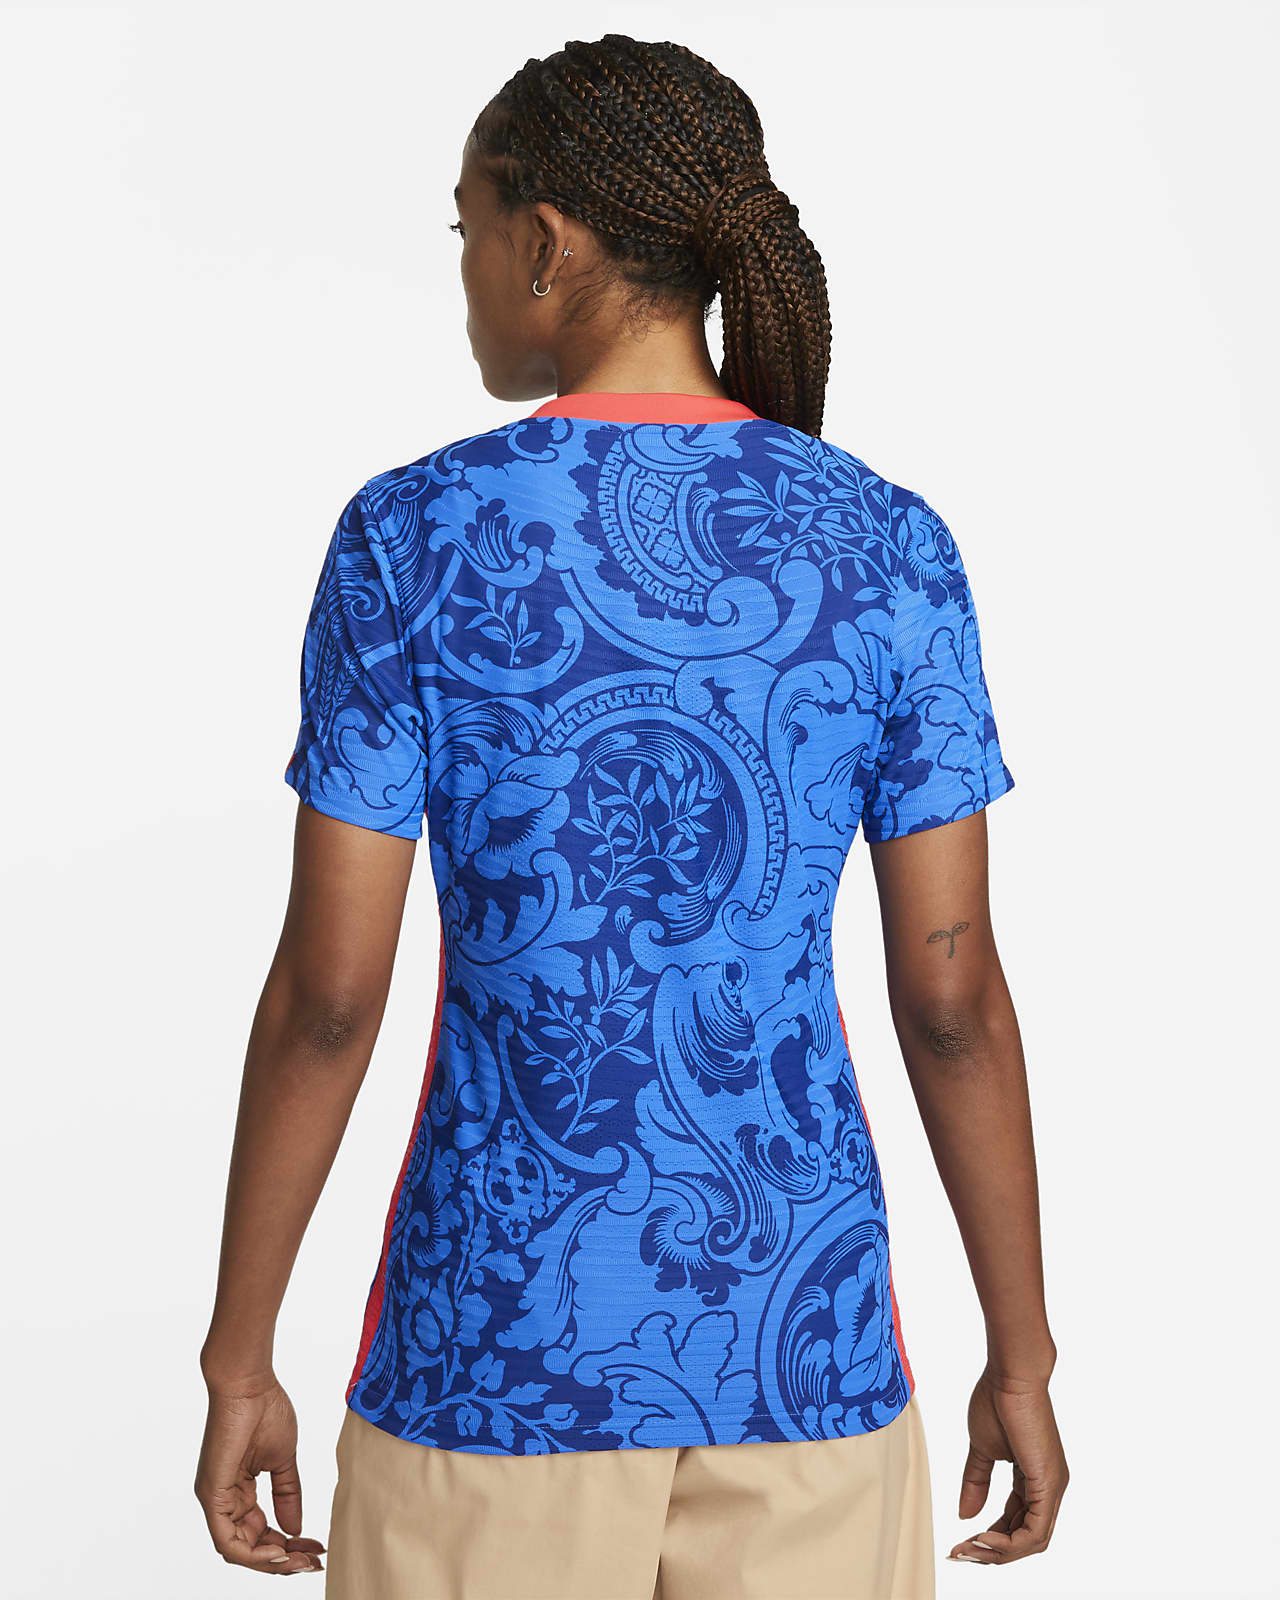 France 2022 Nike WNT Home Kit - Football Shirt Culture - Latest ...